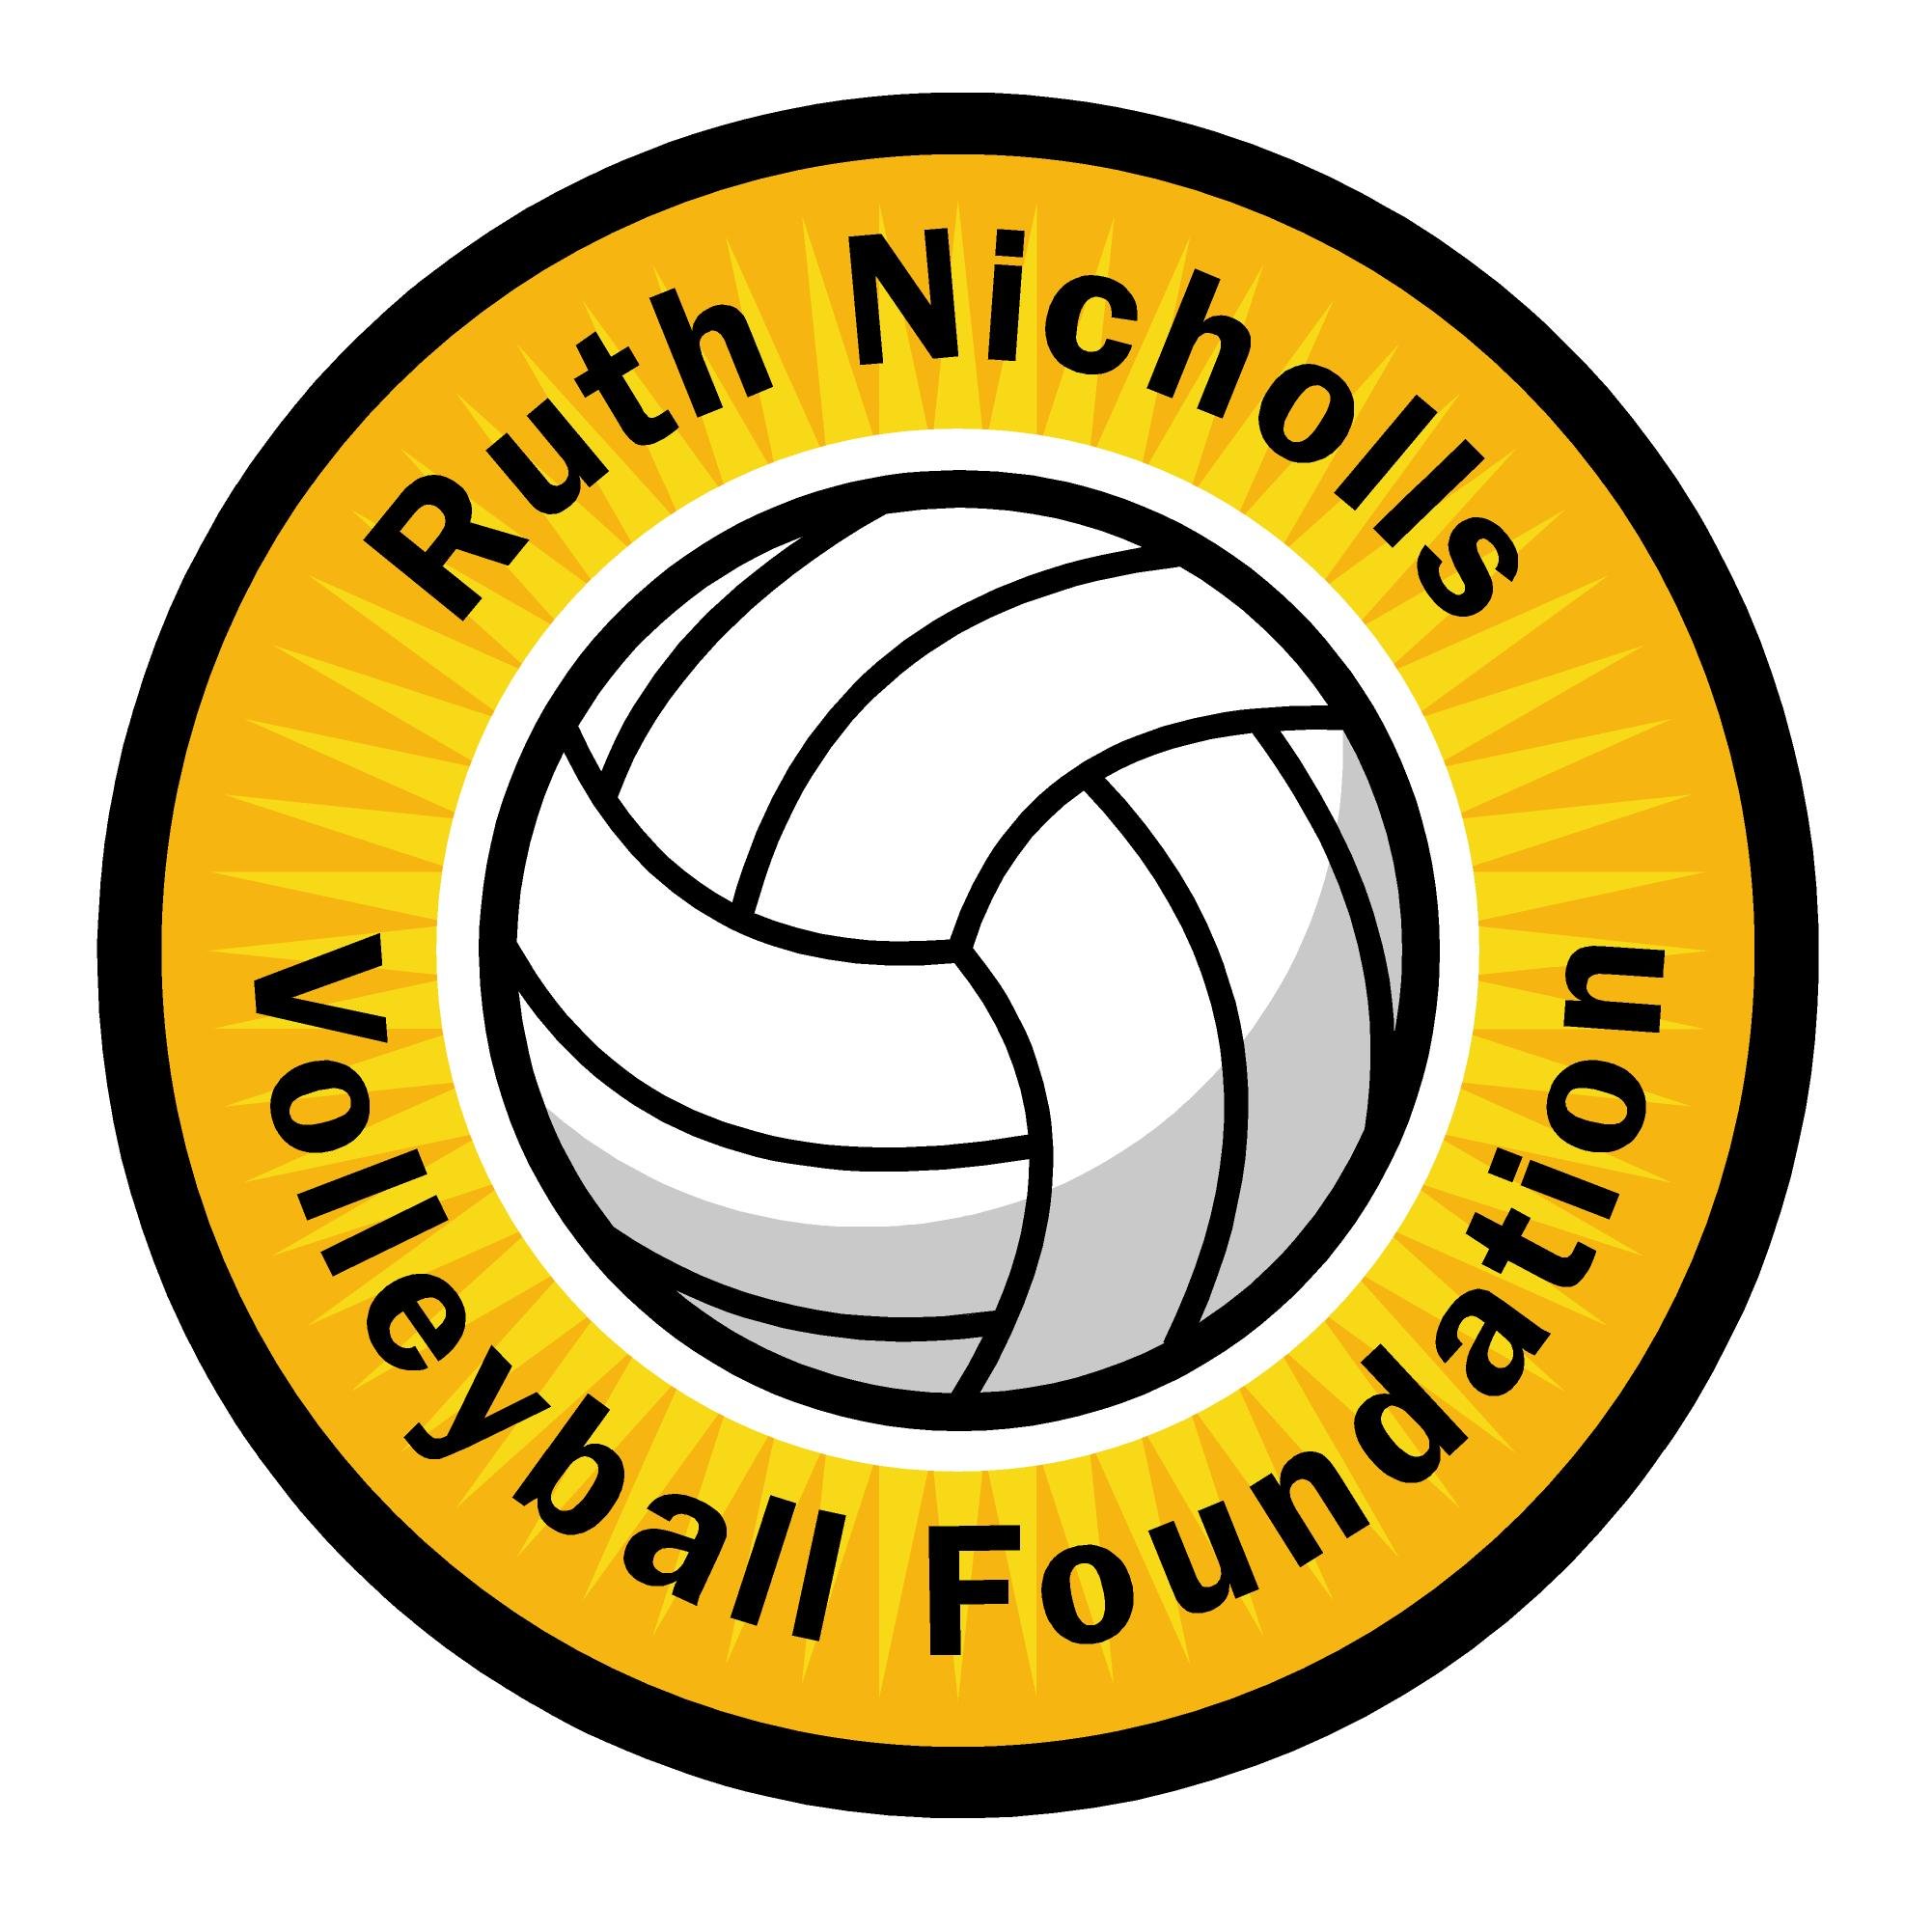 Ruth Nicholls Volleyball Foundation